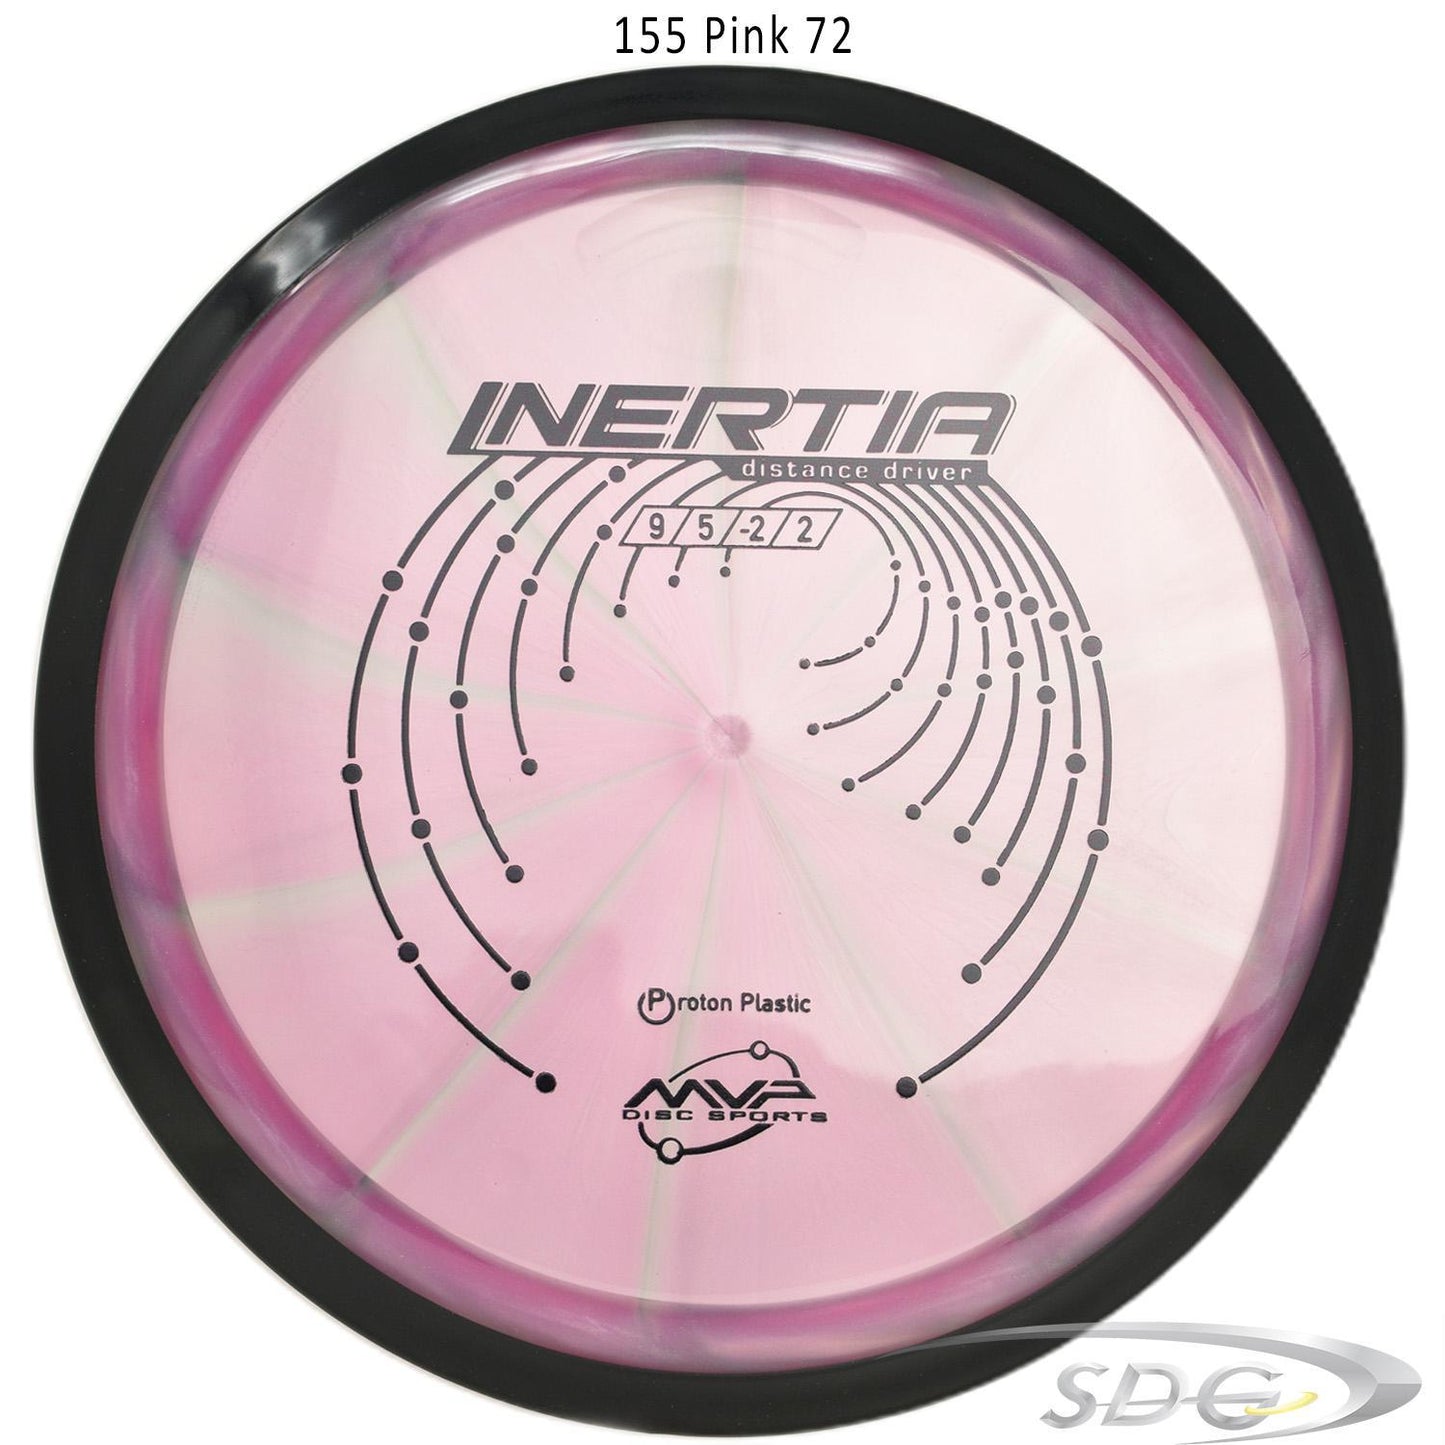 mvp-proton-inertia-disc-golf-distance-driver 155 Pink 72 